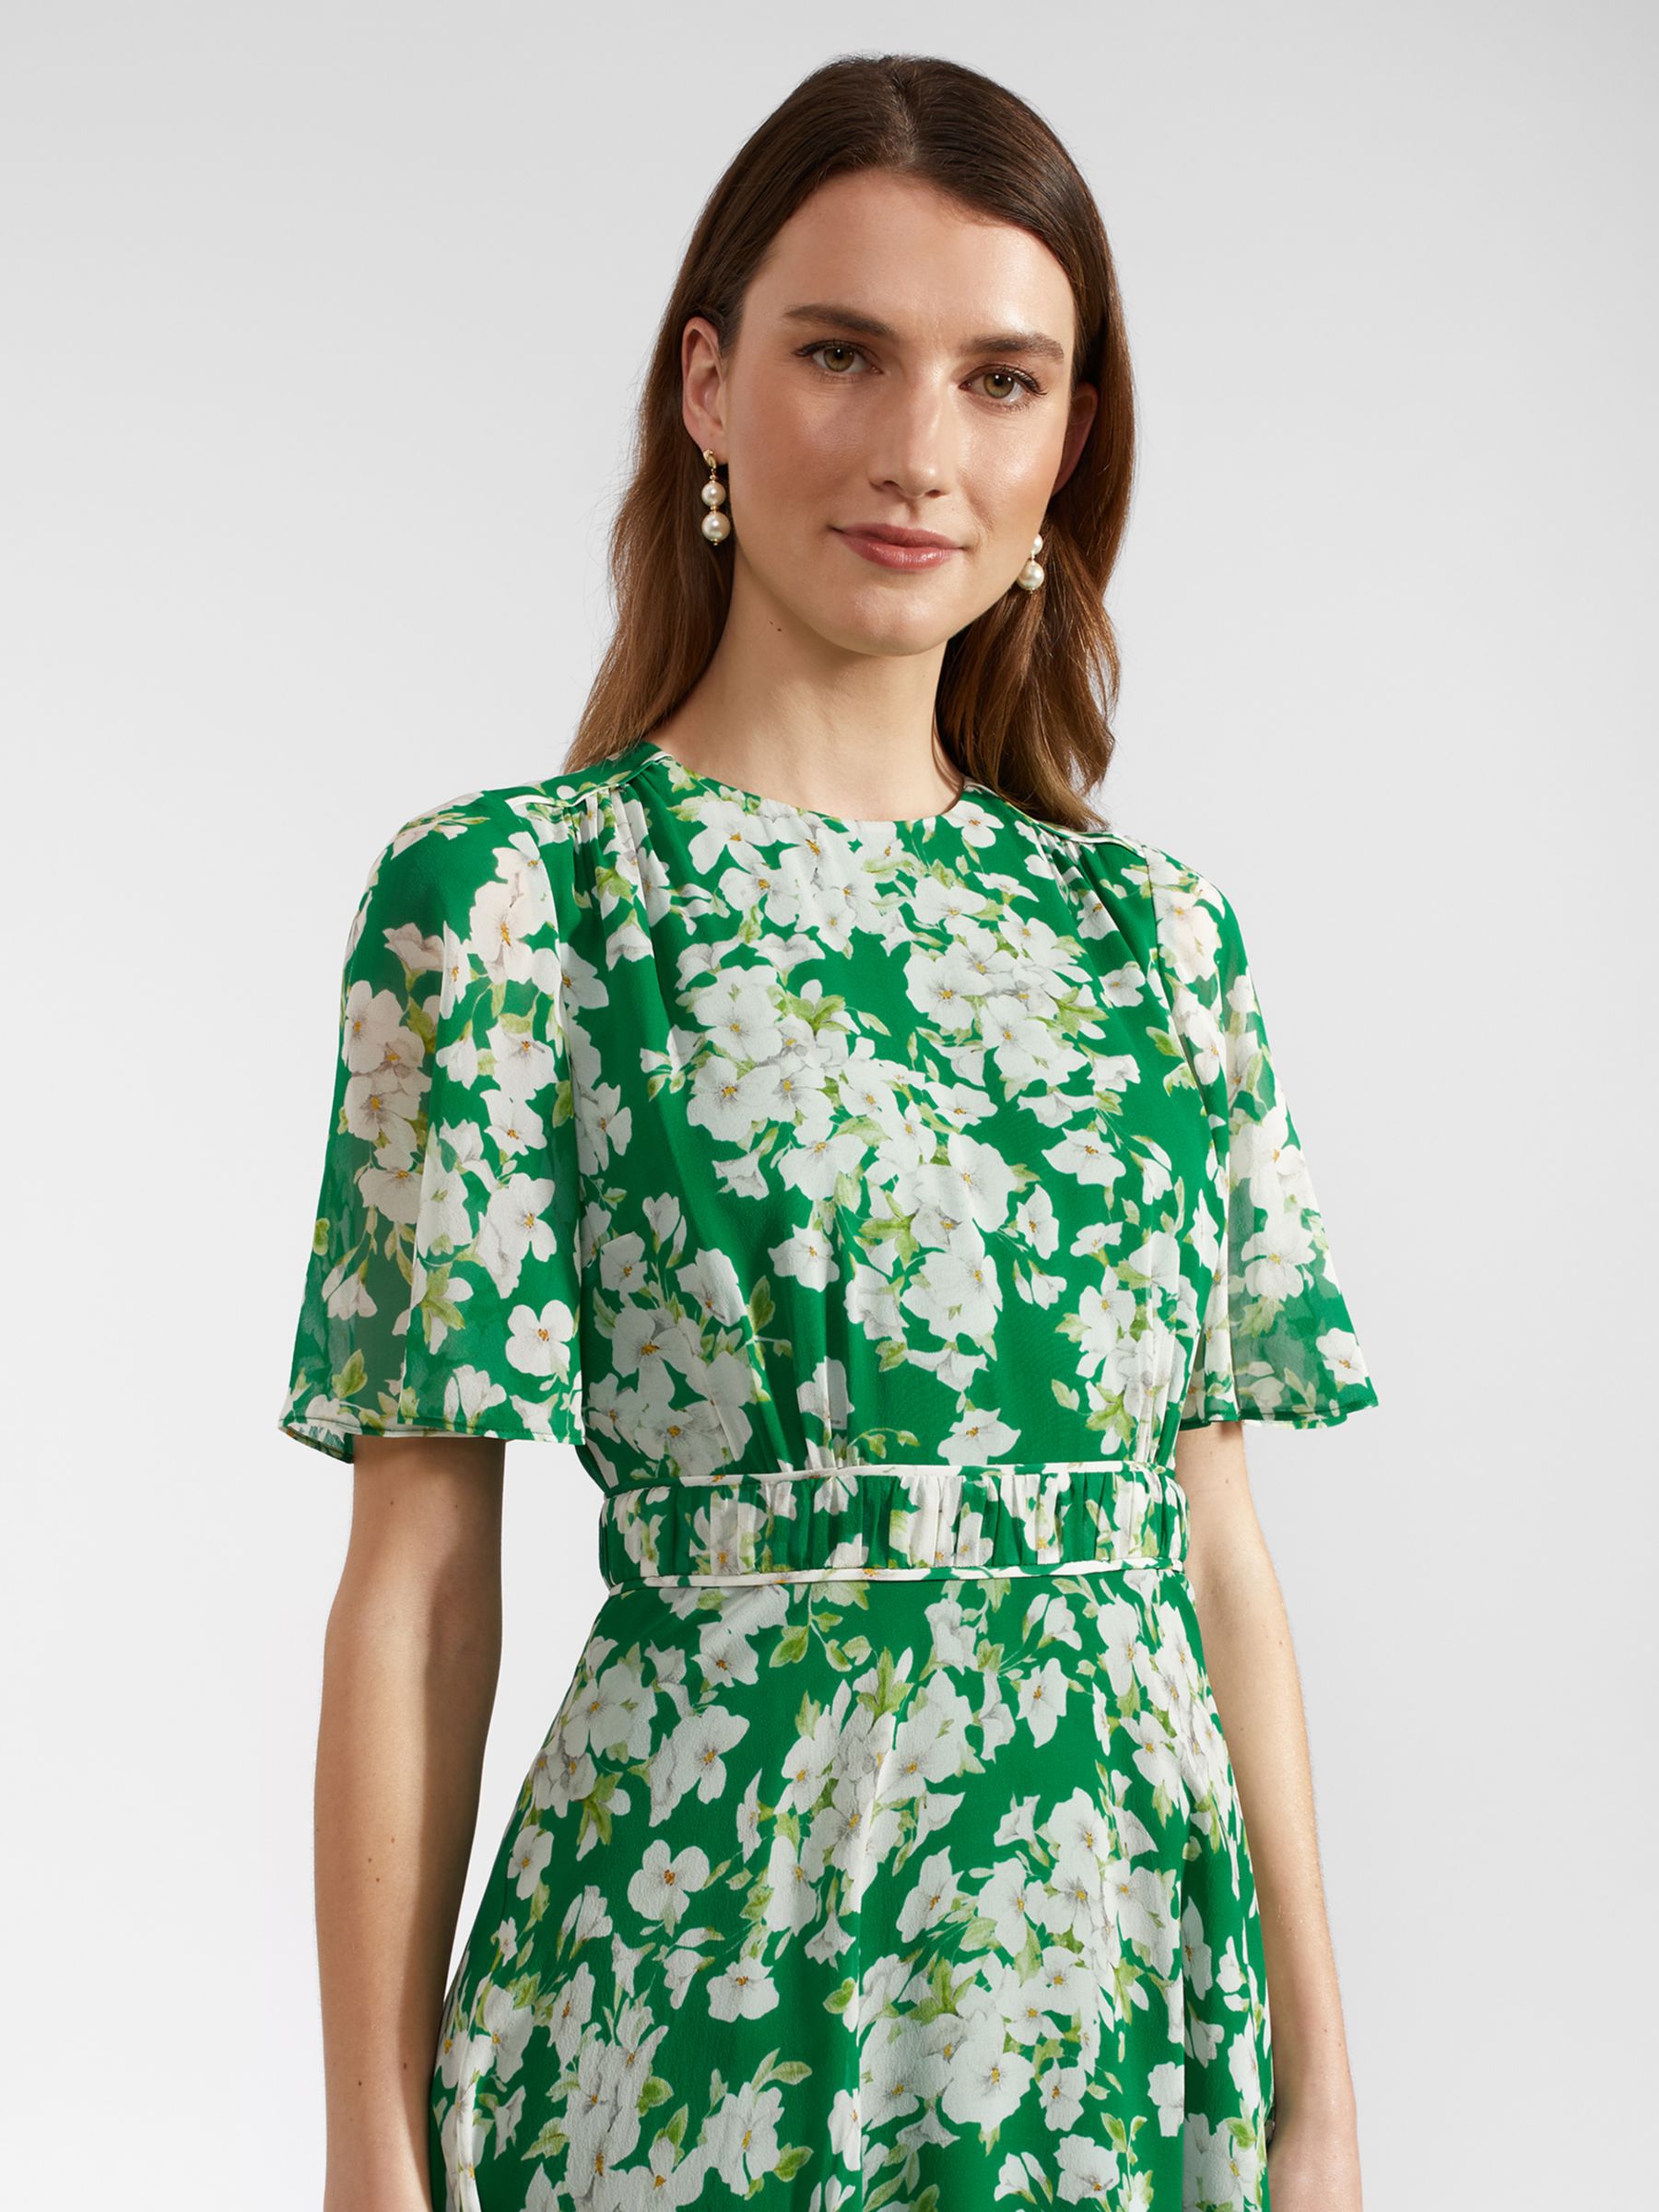 Hobbs Petite Bronwyn Midi Floral Silk Dress, Green/Multi, 10